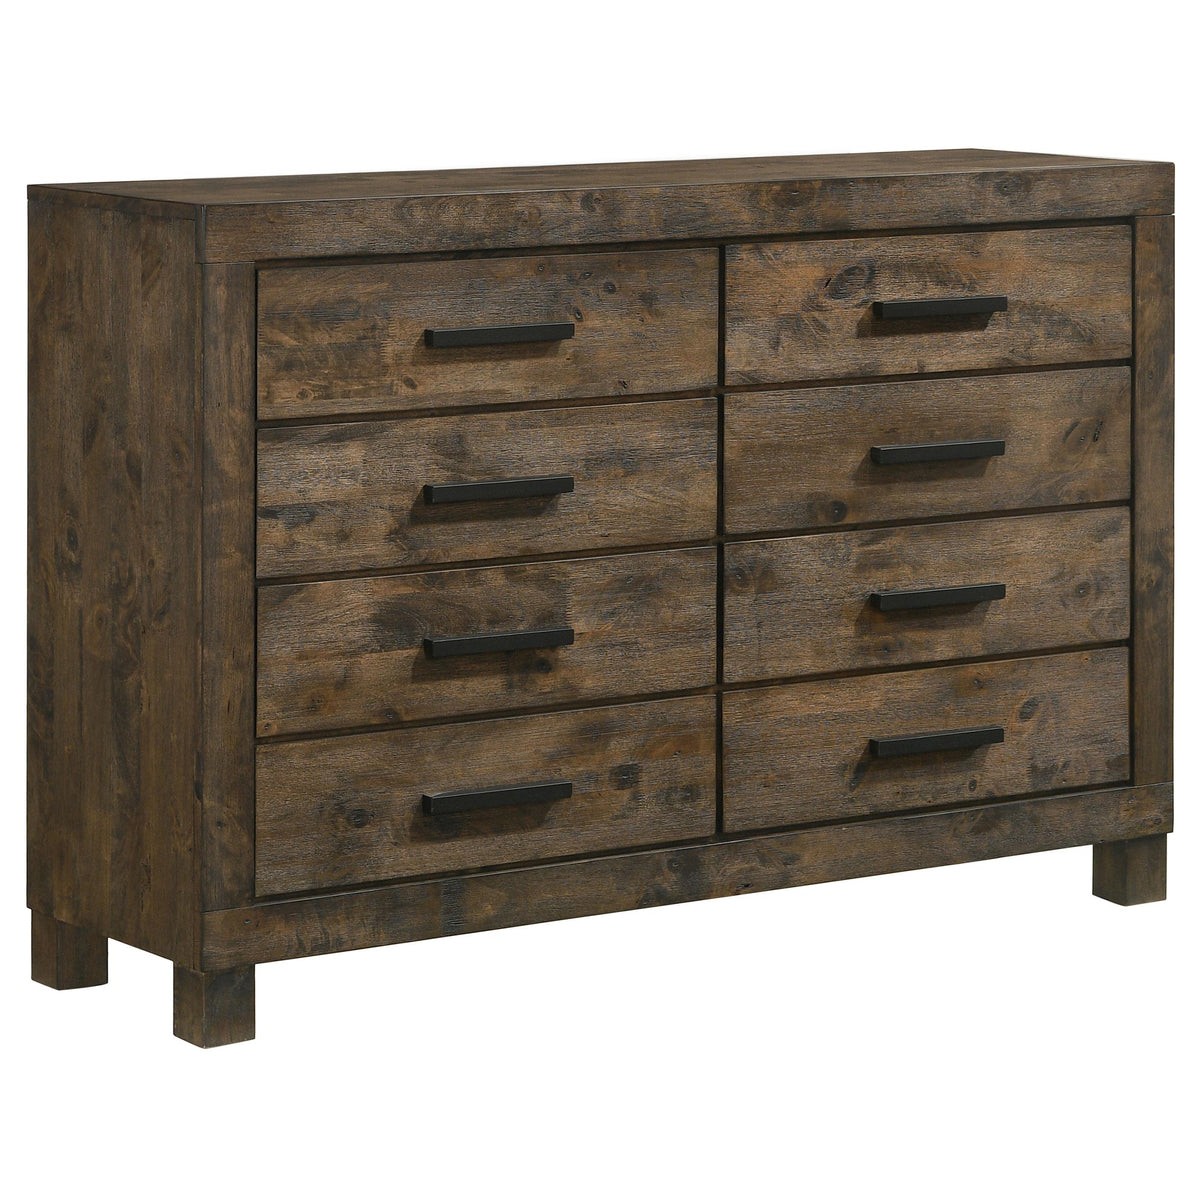 Woodmont 8-drawer Dresser Rustic Golden Brown  Half Price Furniture